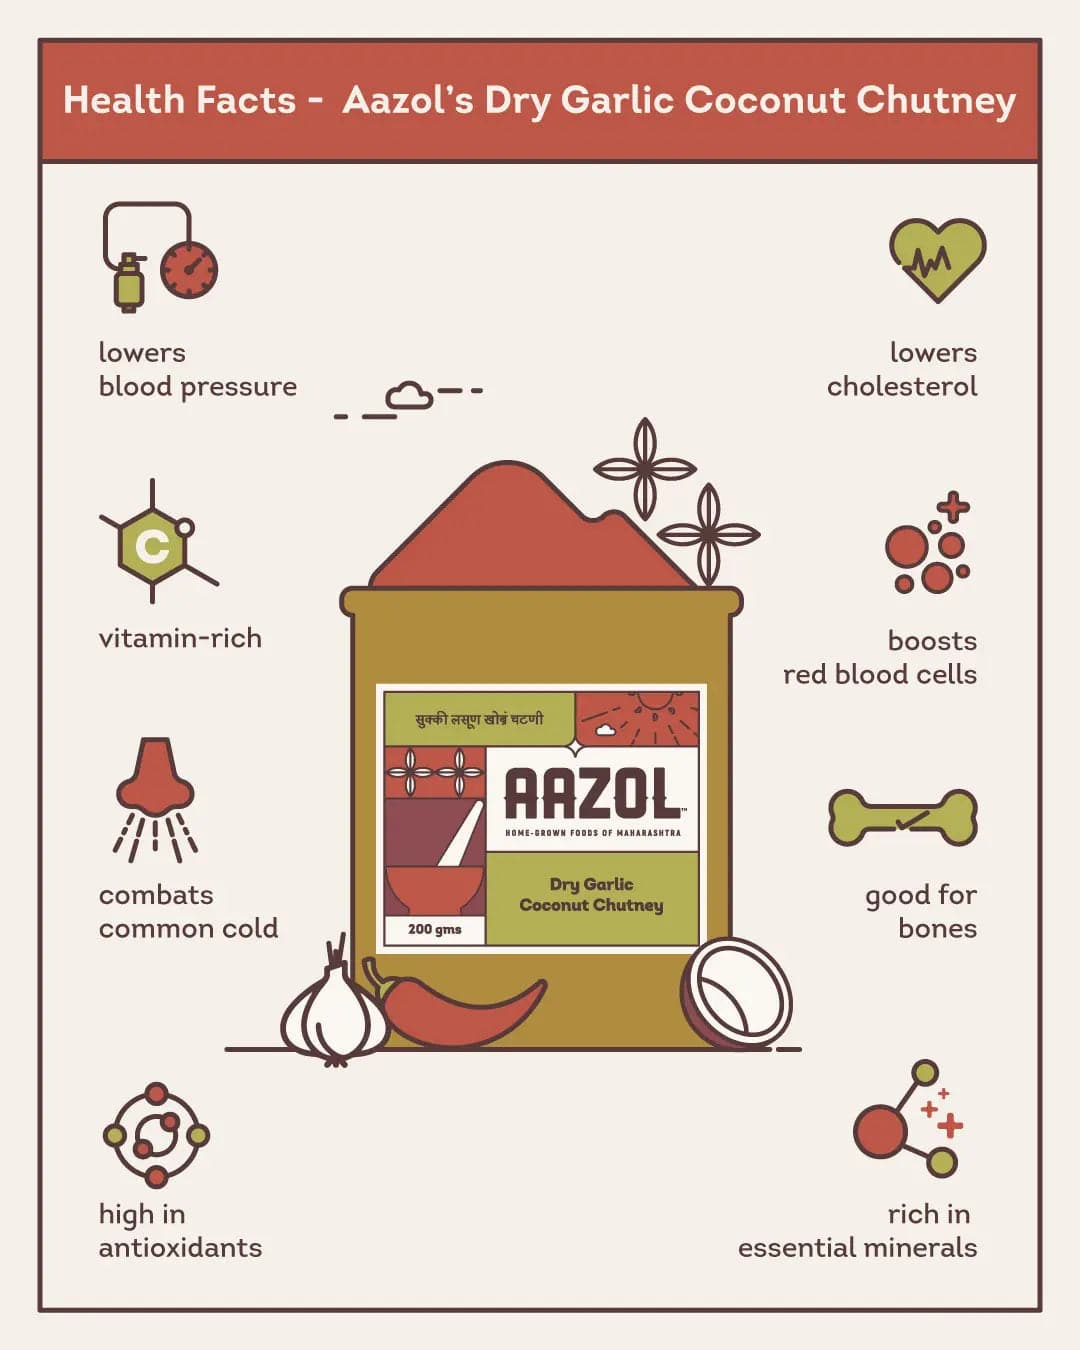 Dry Garlic Coconut Chutney - 200g Aazol